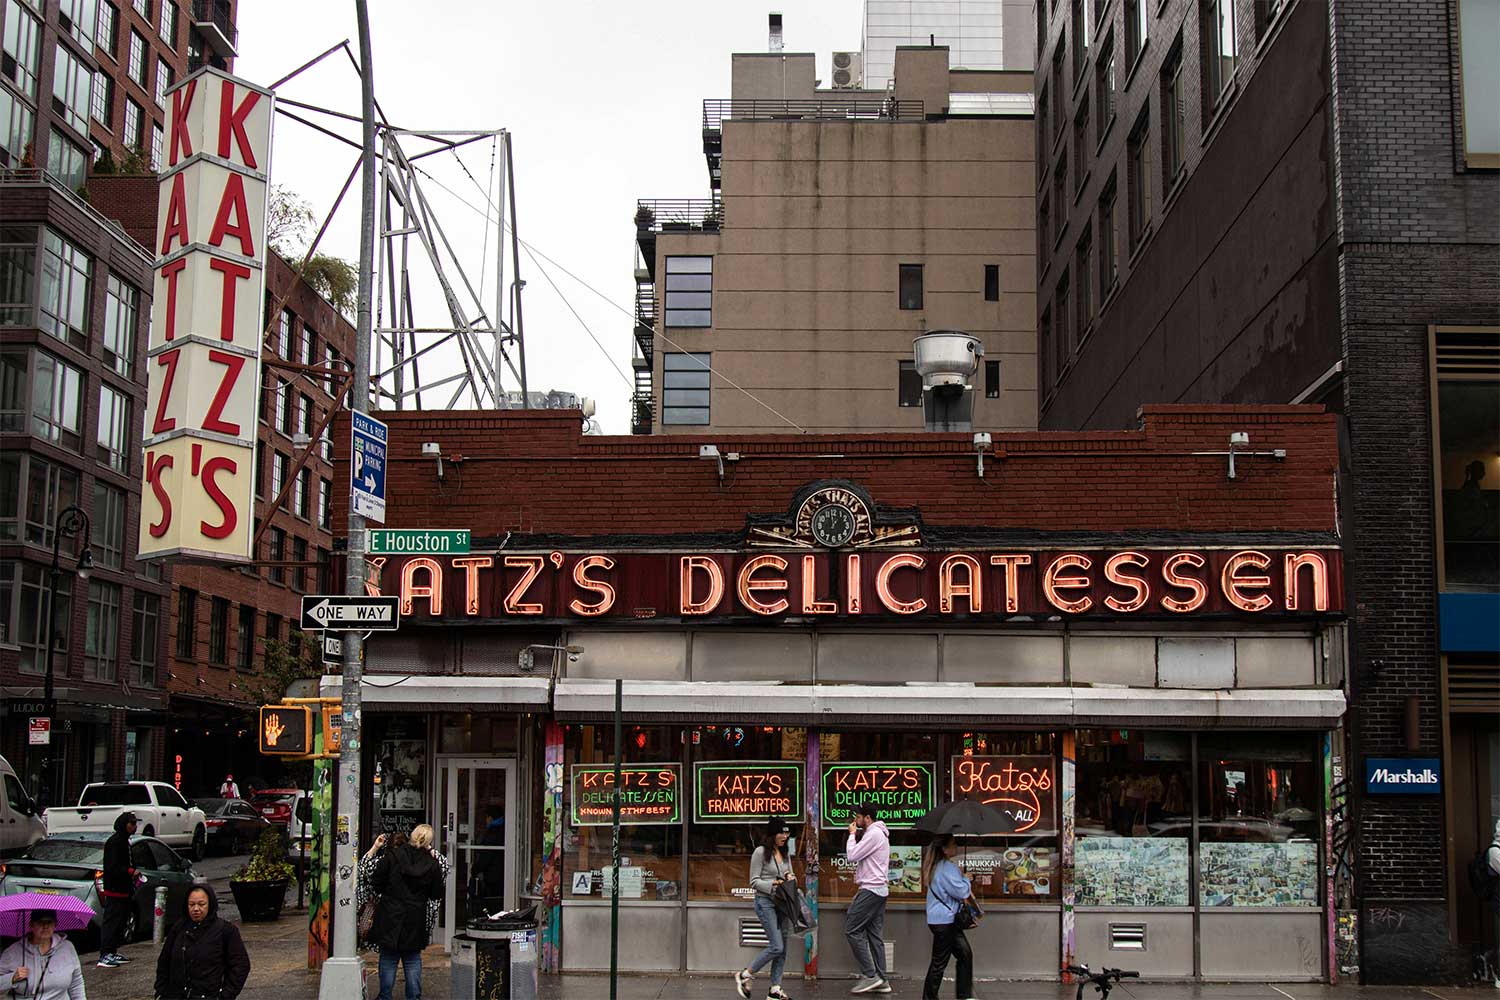 Katz's Delicatessen, one of the oldest restaurants in NYC, on East Houston Street